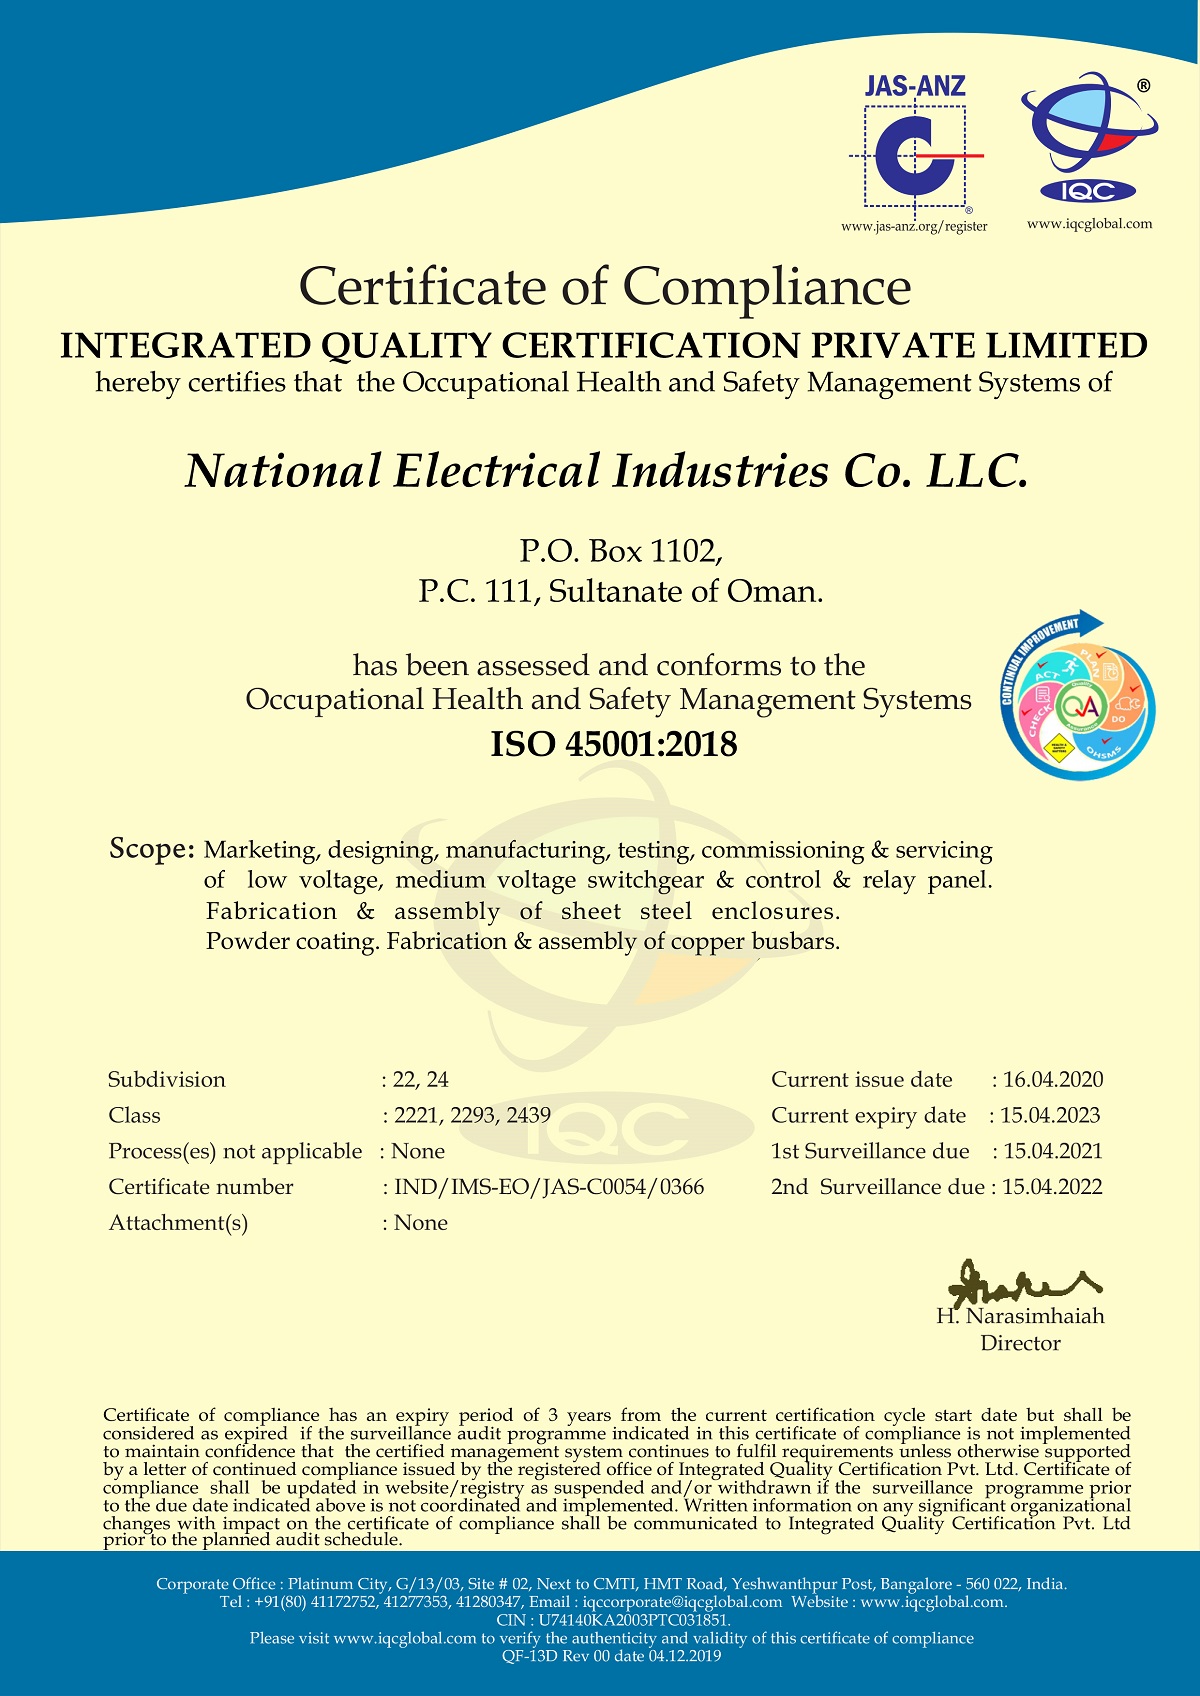 NEI OMAN - ISO 45001:2018